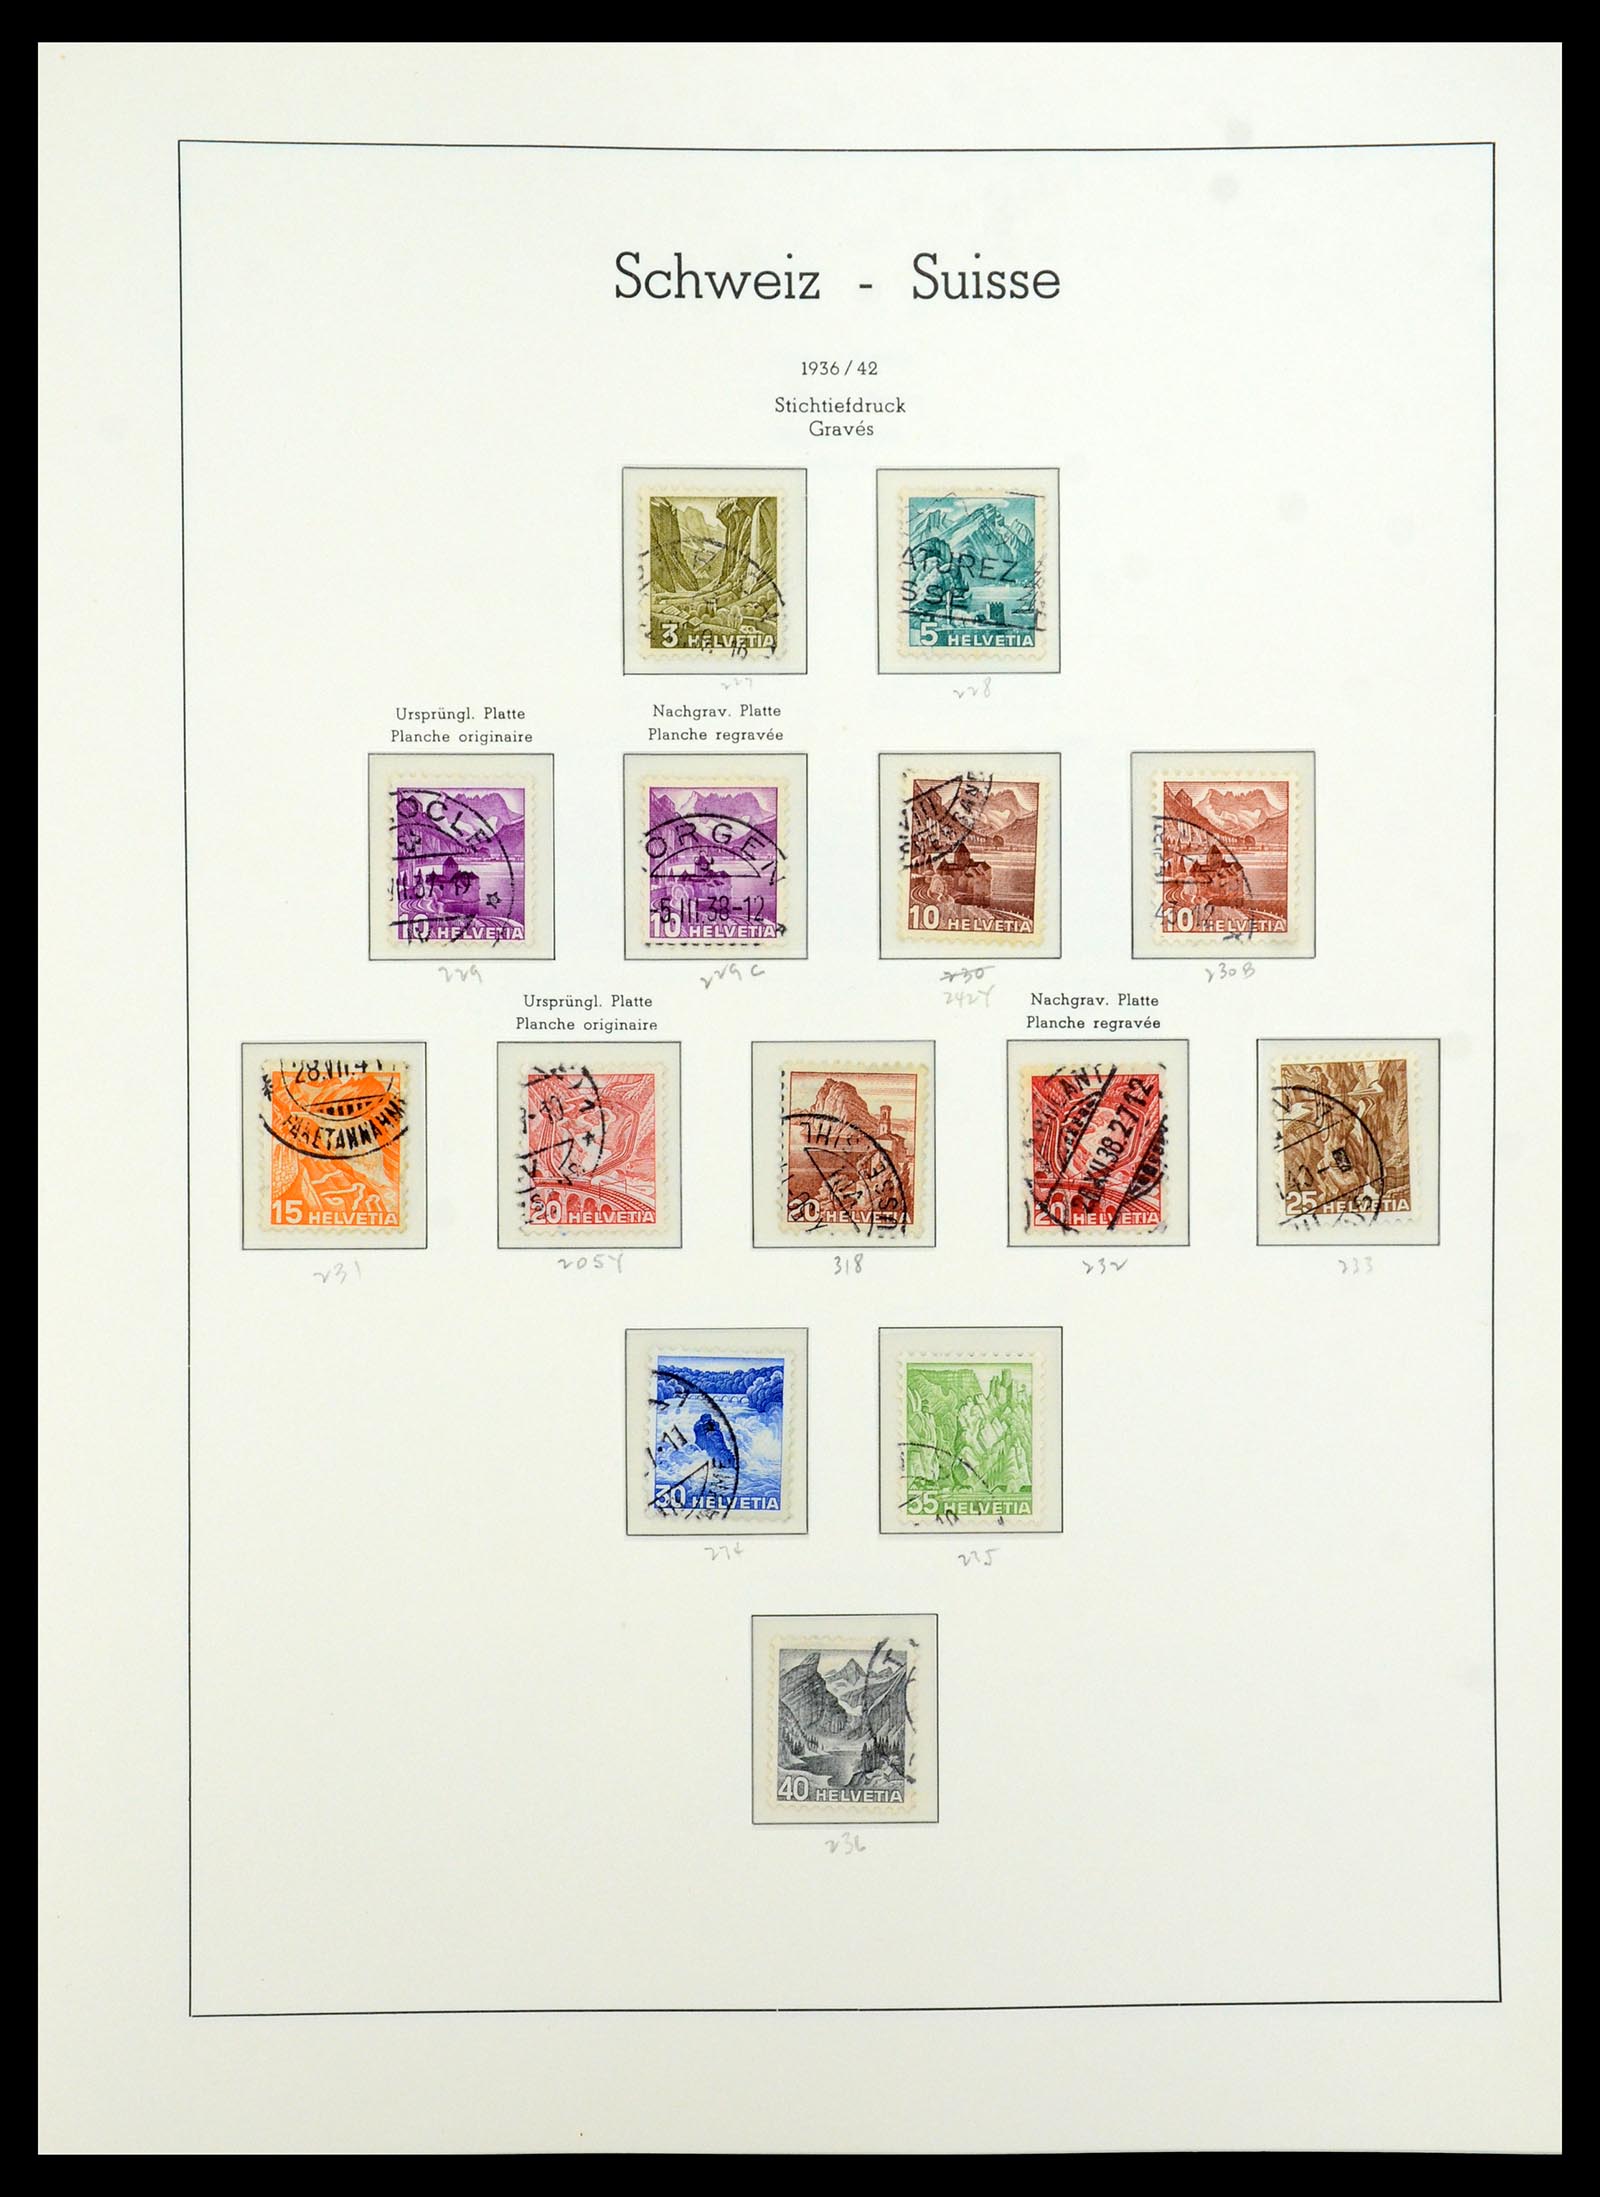 36284 020 - Stamp collection 36284 Switzerland 1854-2006.